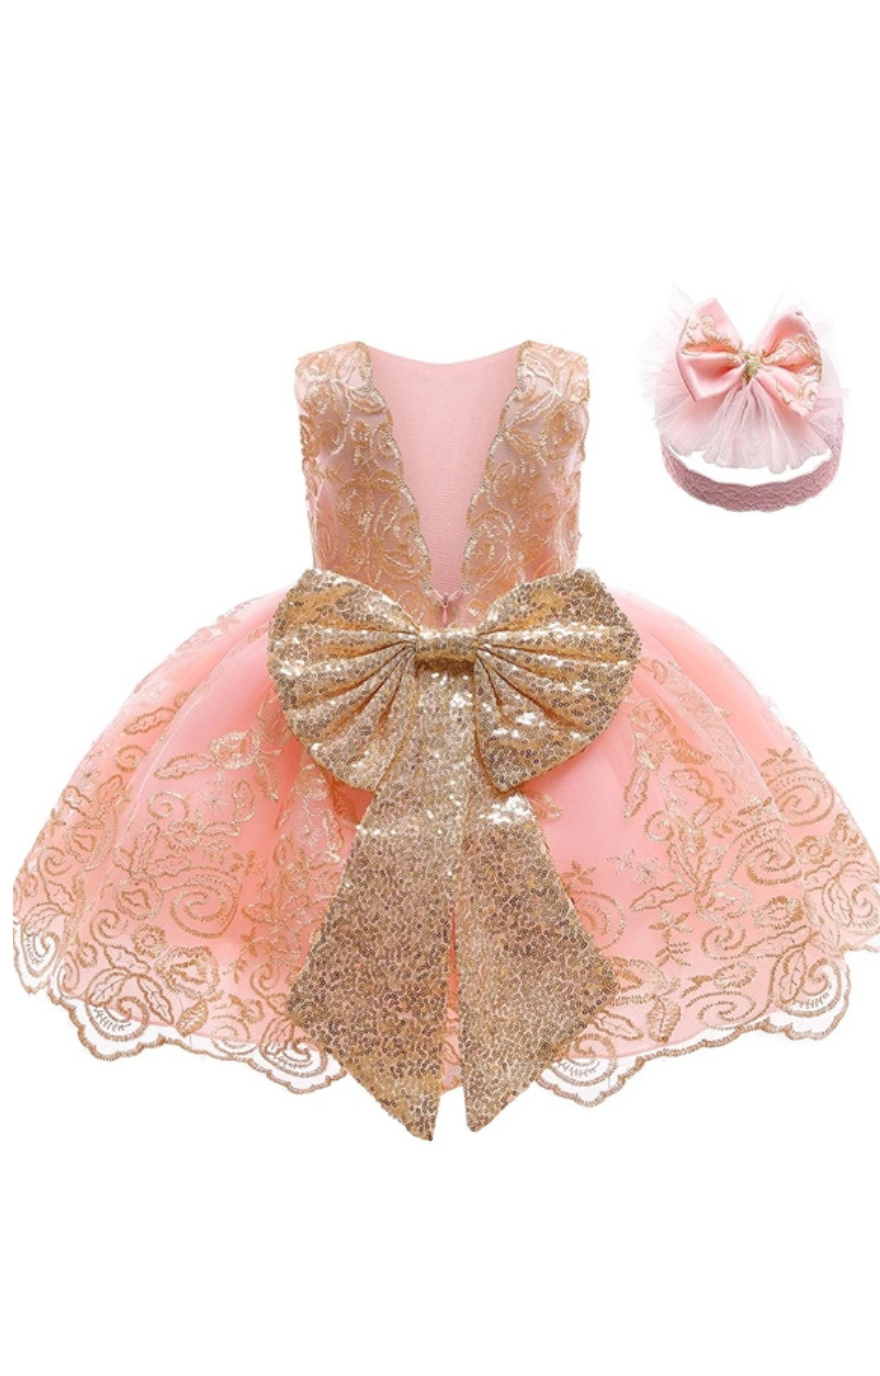 Maya Baby Dress - Peach/Gold